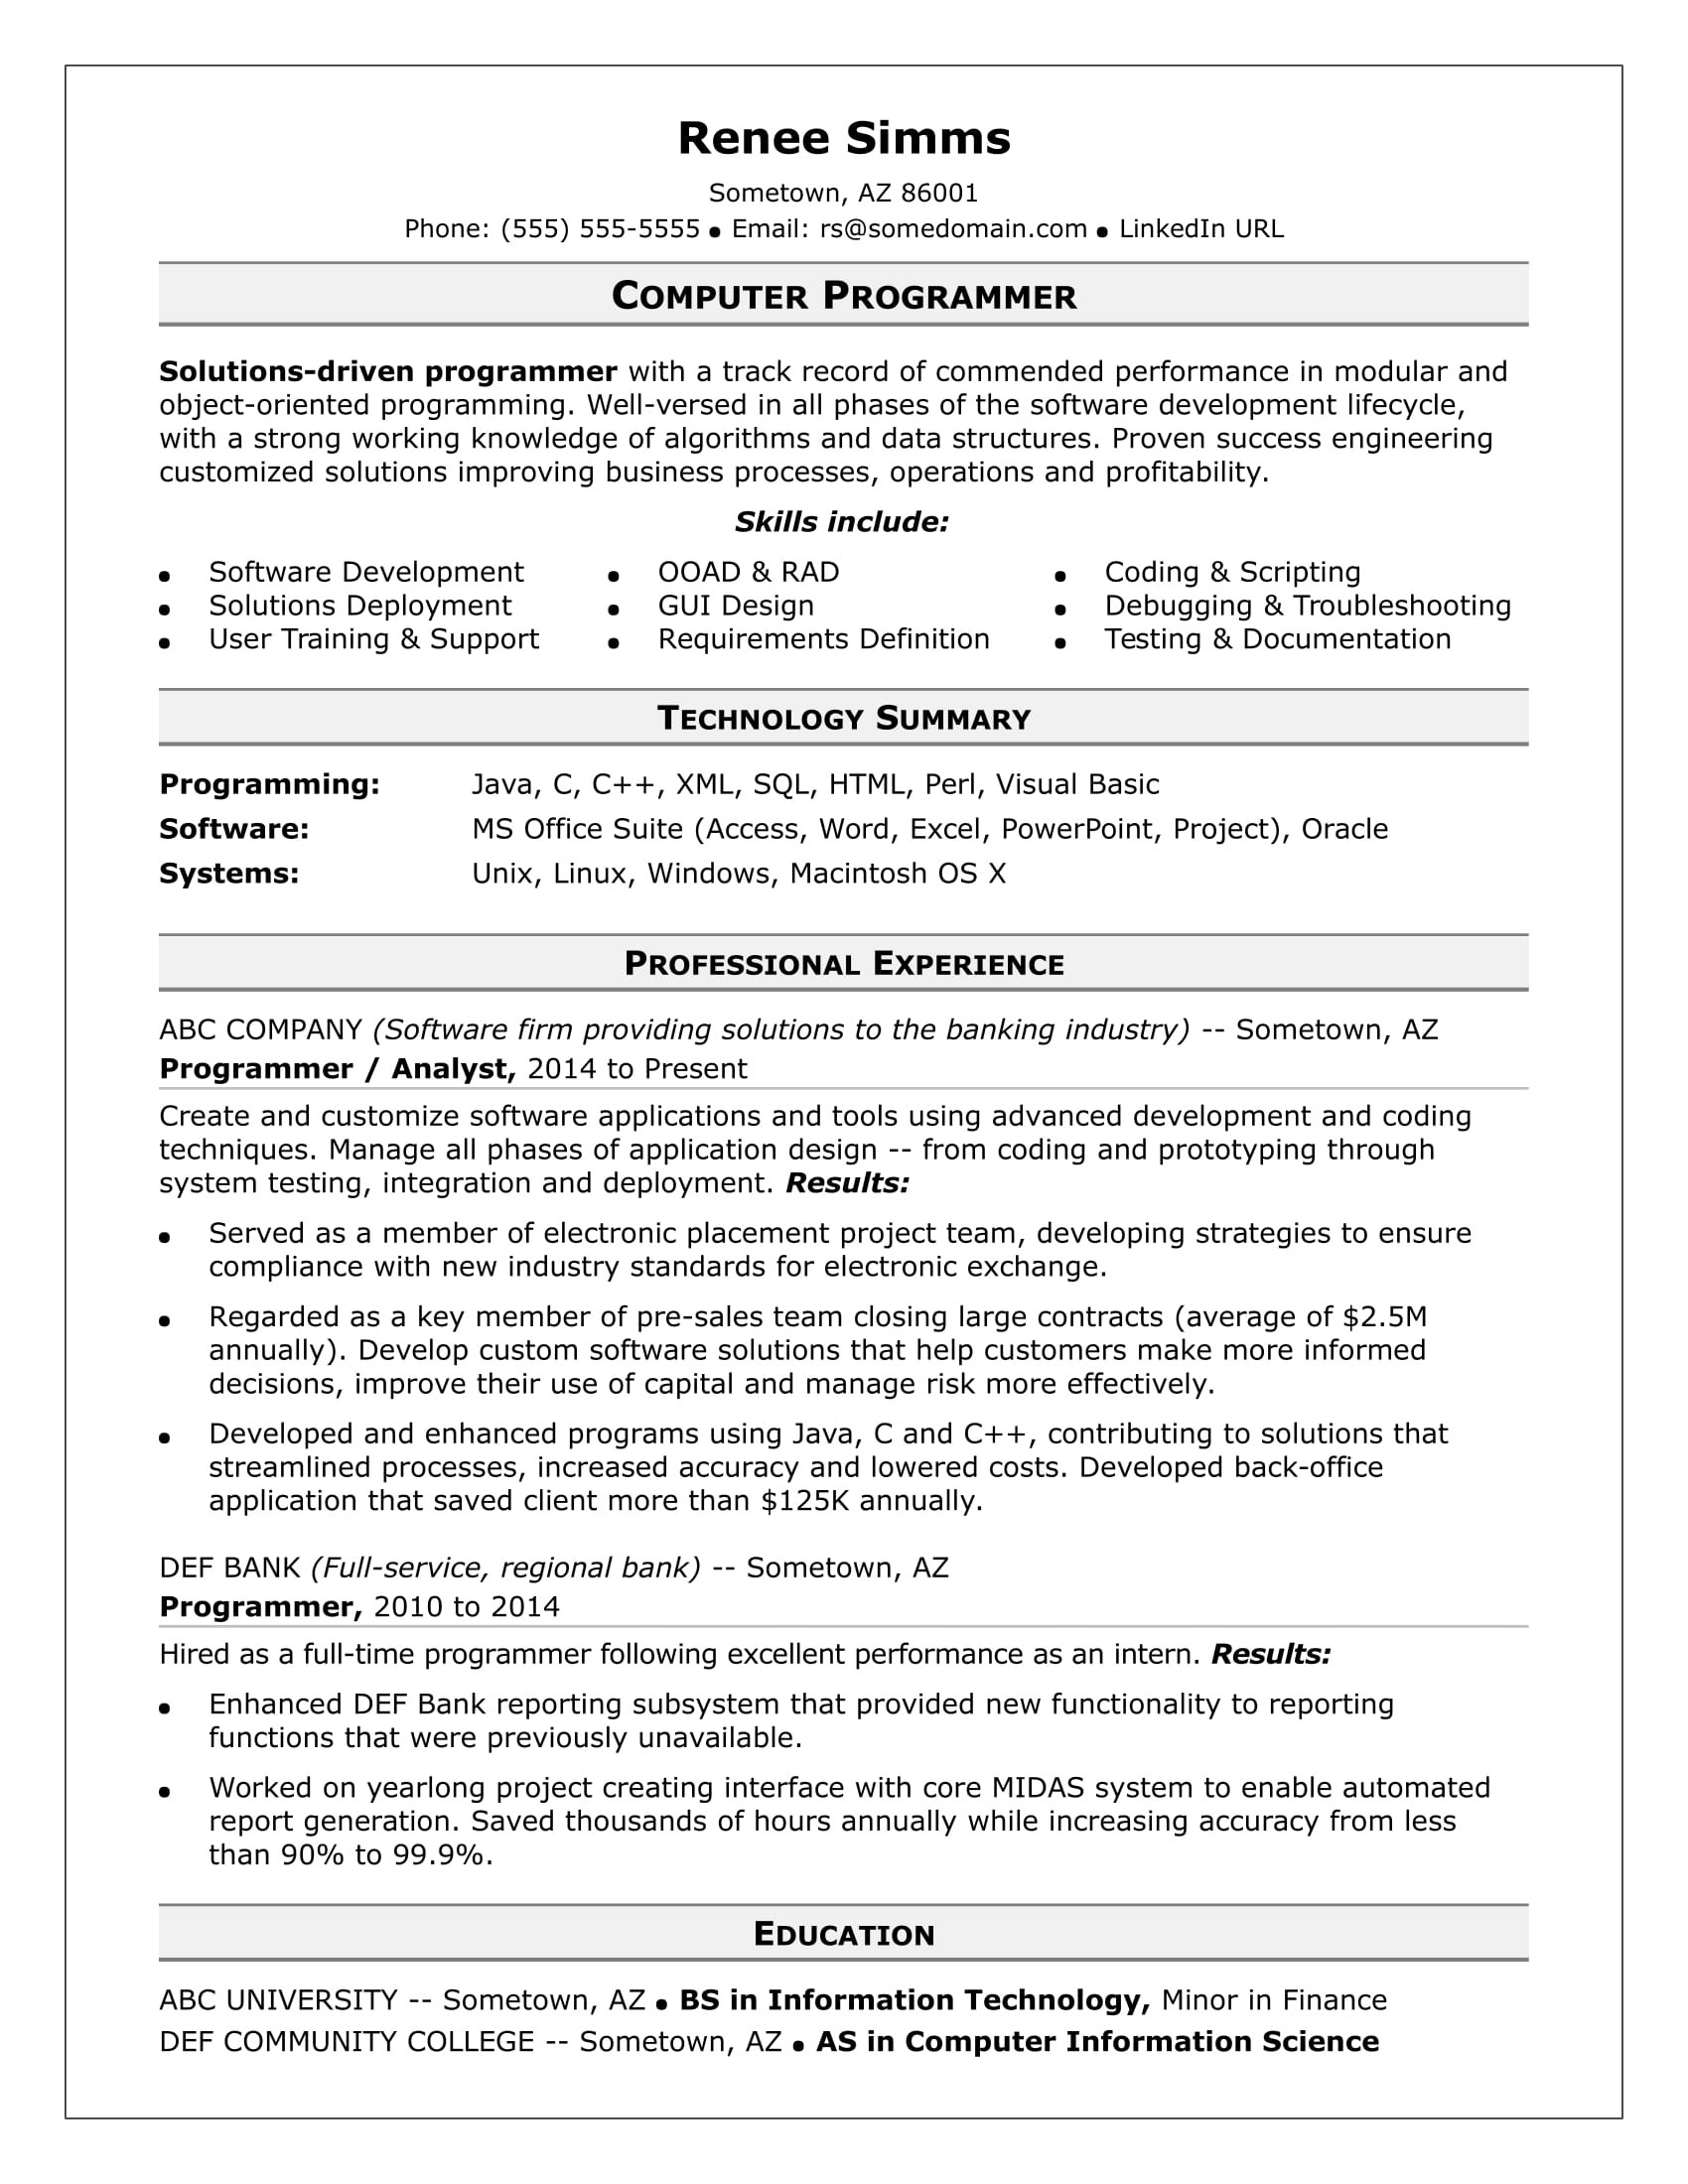 Sample Resume for Experienced Application Developer Sample Resume for A Midlevel Computer Programmer Monster.com